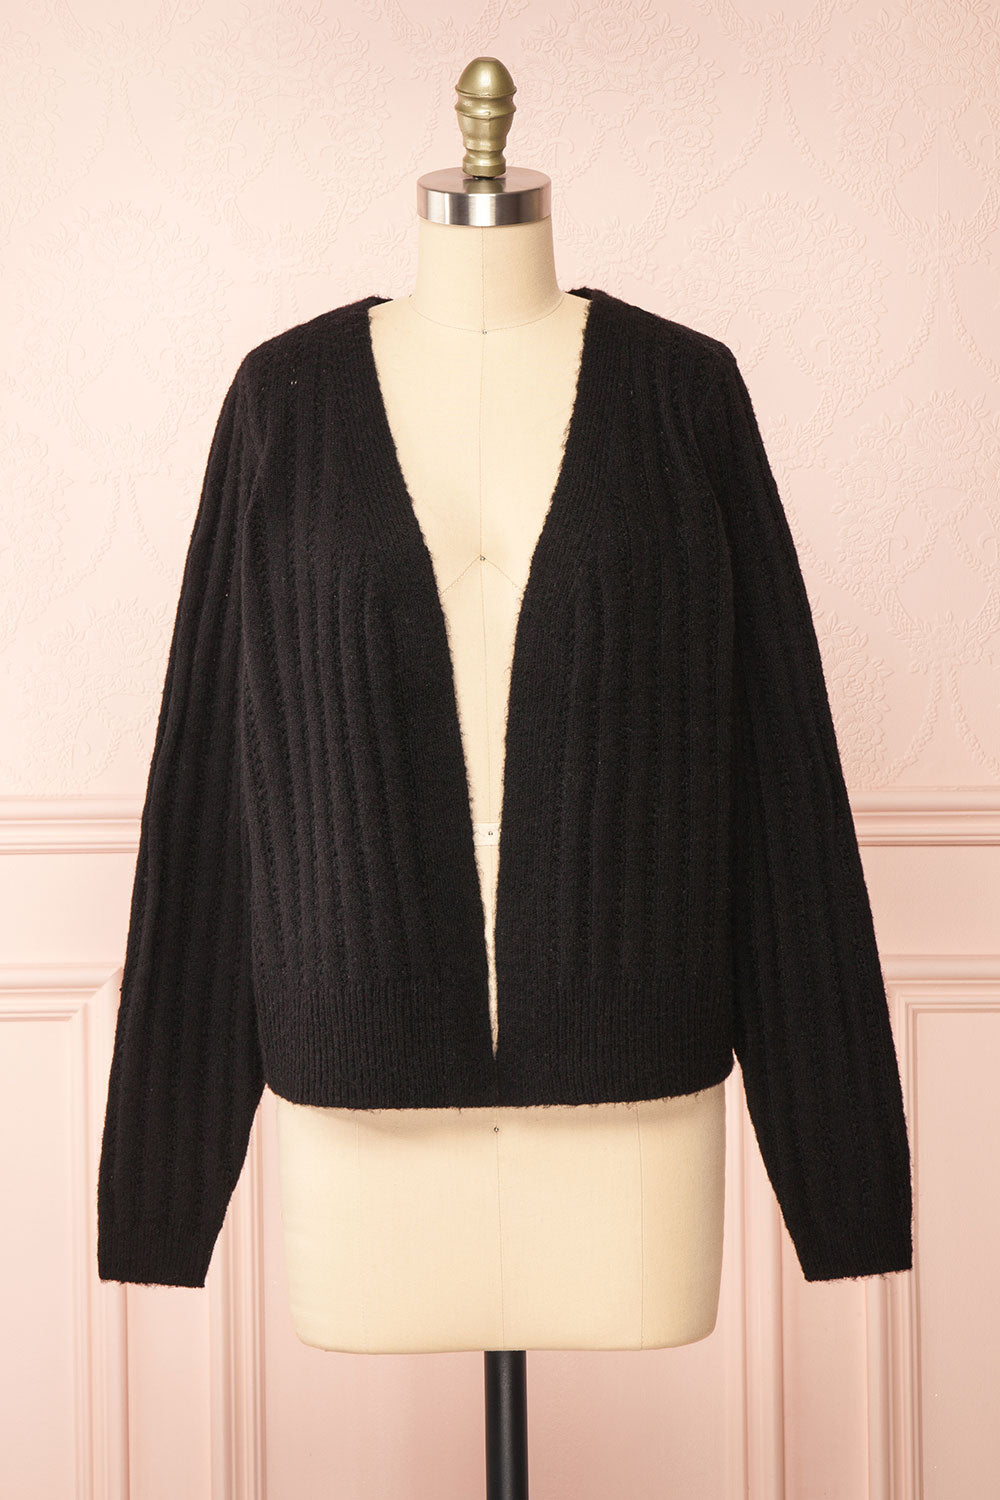 Bezie Black Knit Open-Front Cardigan | Boutique 1861 front view